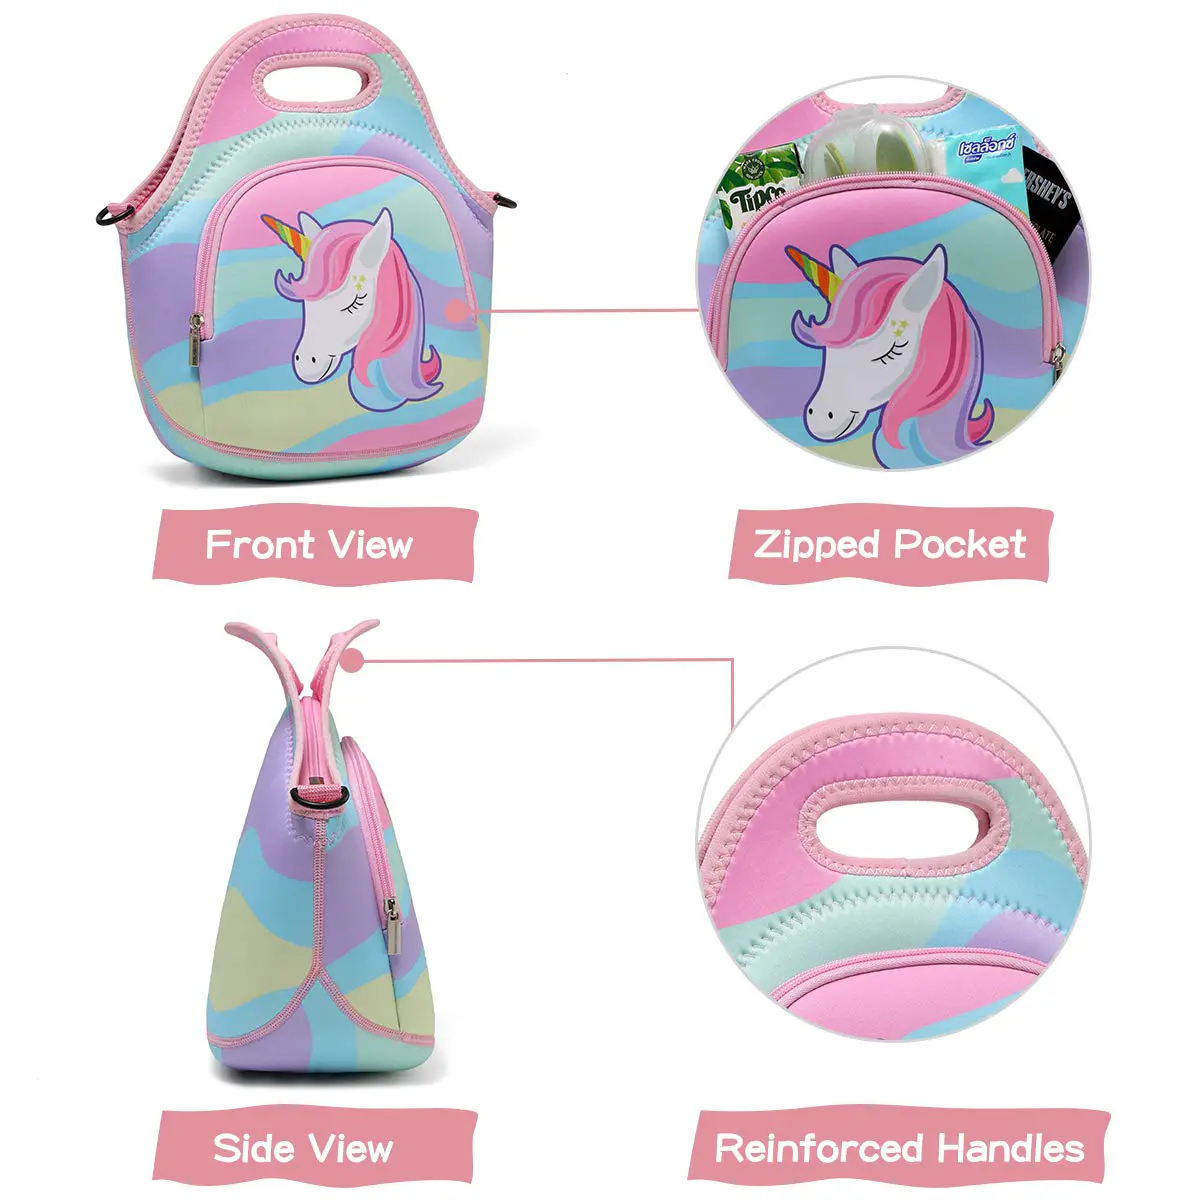 Prosperity cooler neoprene bag manufacturer with accessories pocket for sale